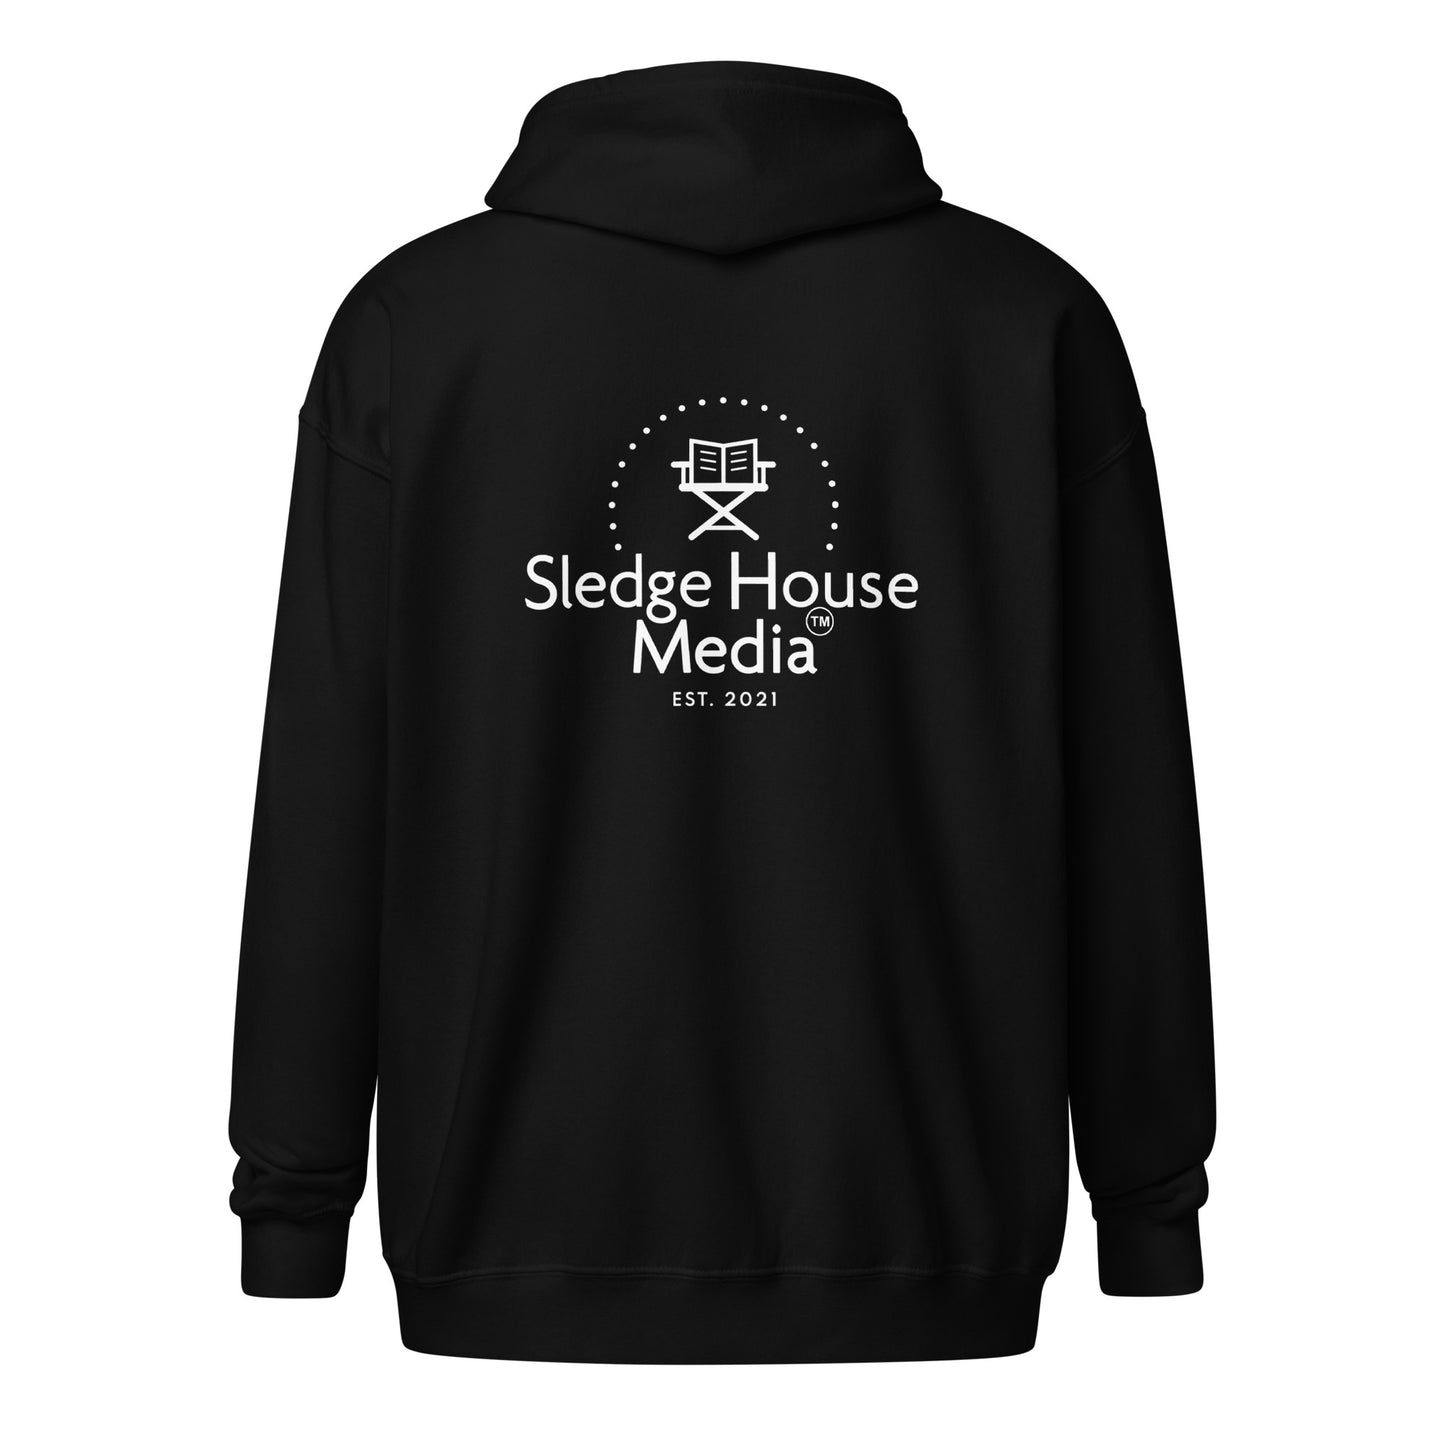 "The OG" Sledge House Media Cozy Zip Unisex Hoodie